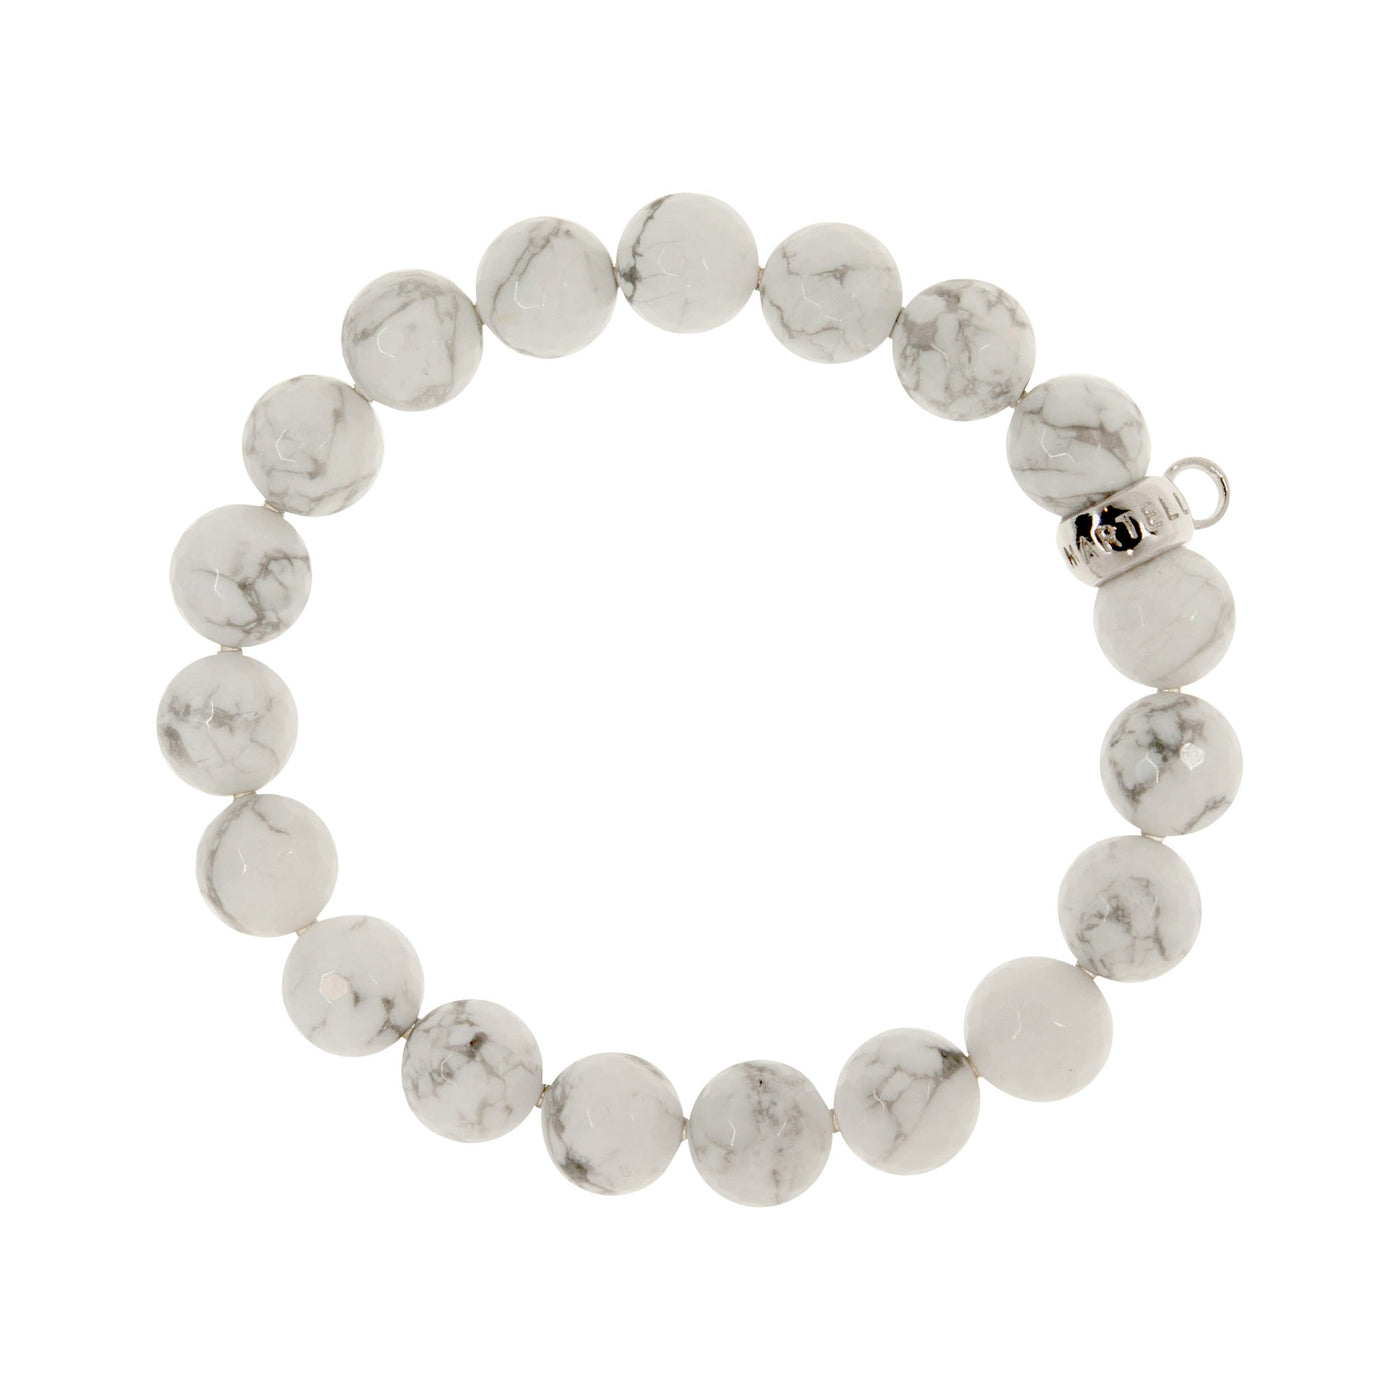 Rebecca Sloane Silver 10 mm White Howlite Bracelet Charm